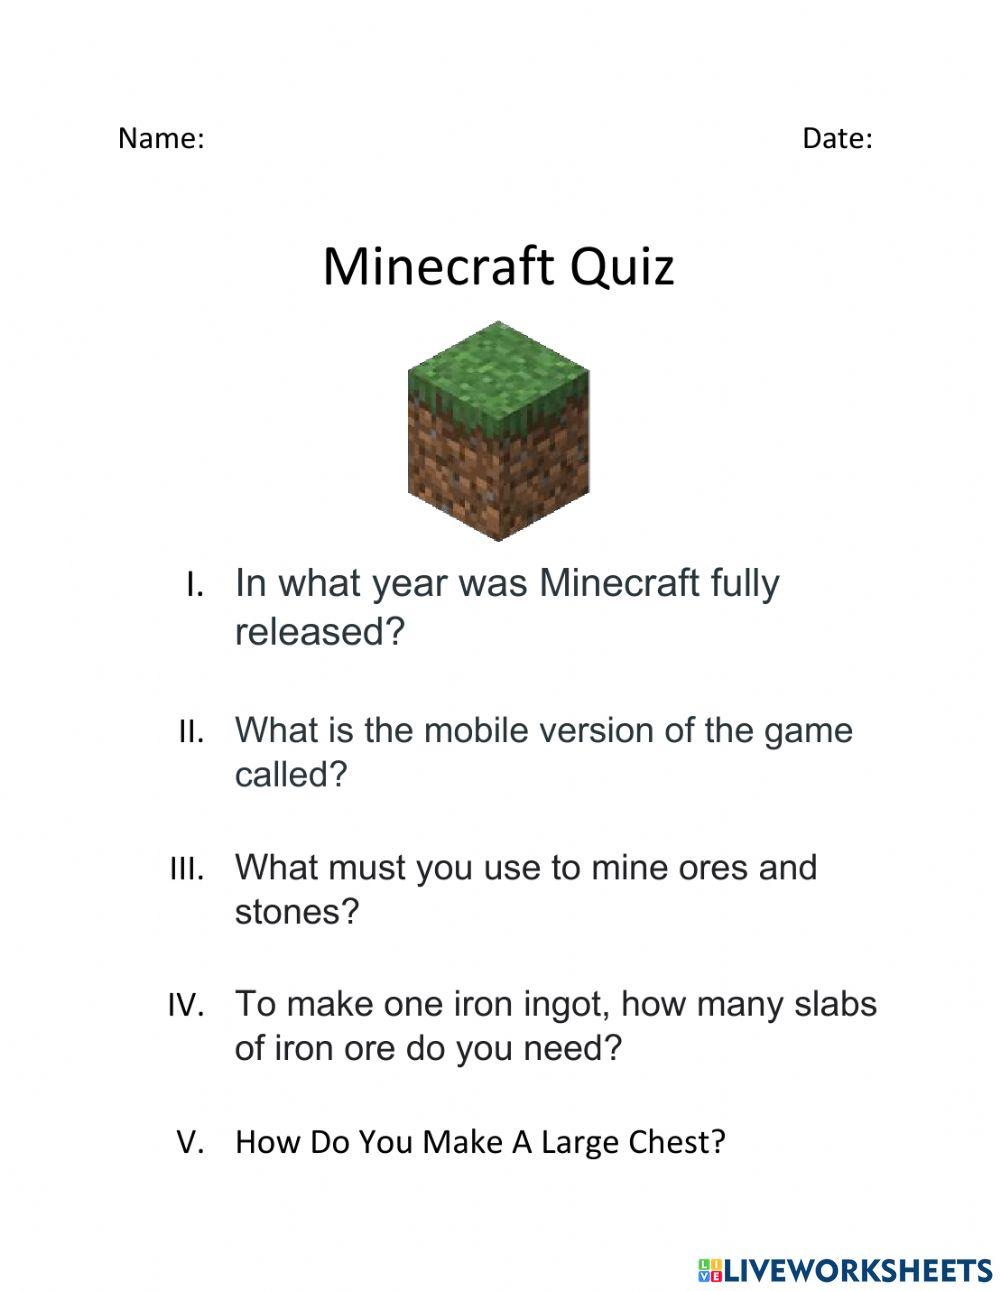 Minecraft quiz e muito legal